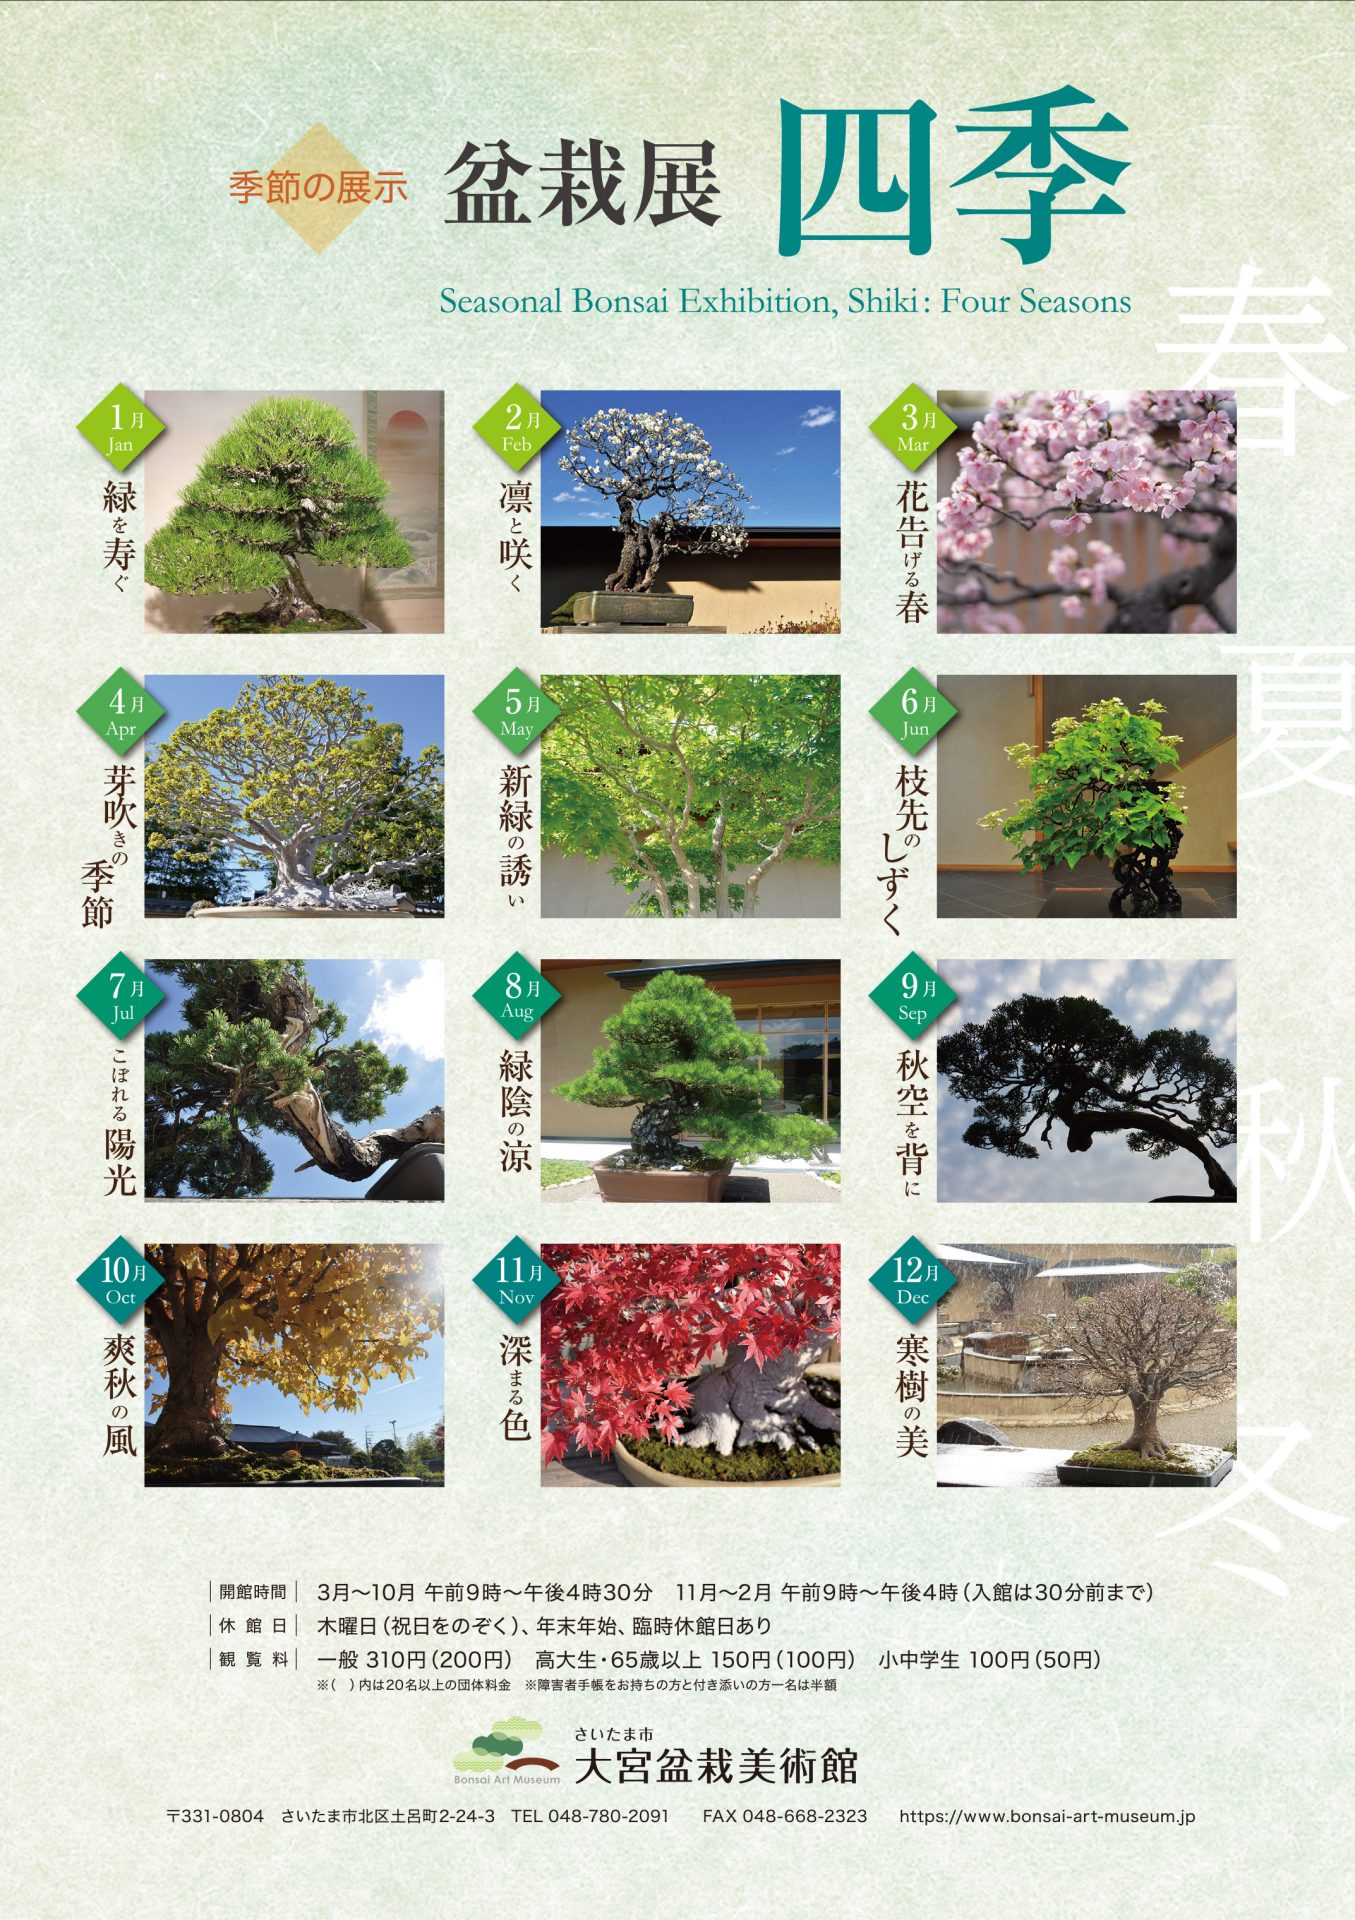 Seasonal Bonsai Exhibition, Shiki: Four Seasons, March, Flowers Herald Spring